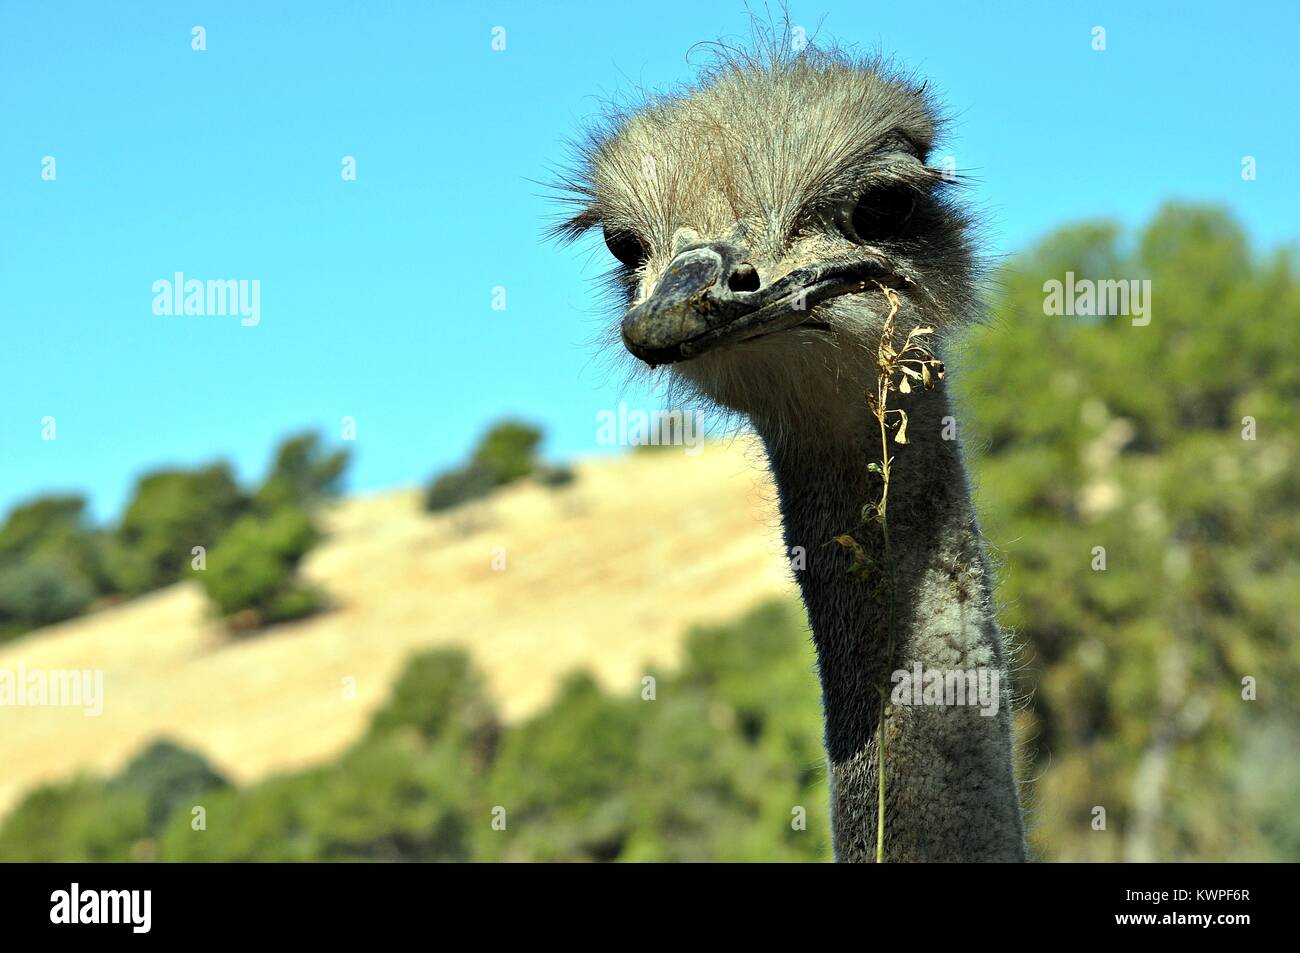 Cara de avestruz vertical Foto de stock